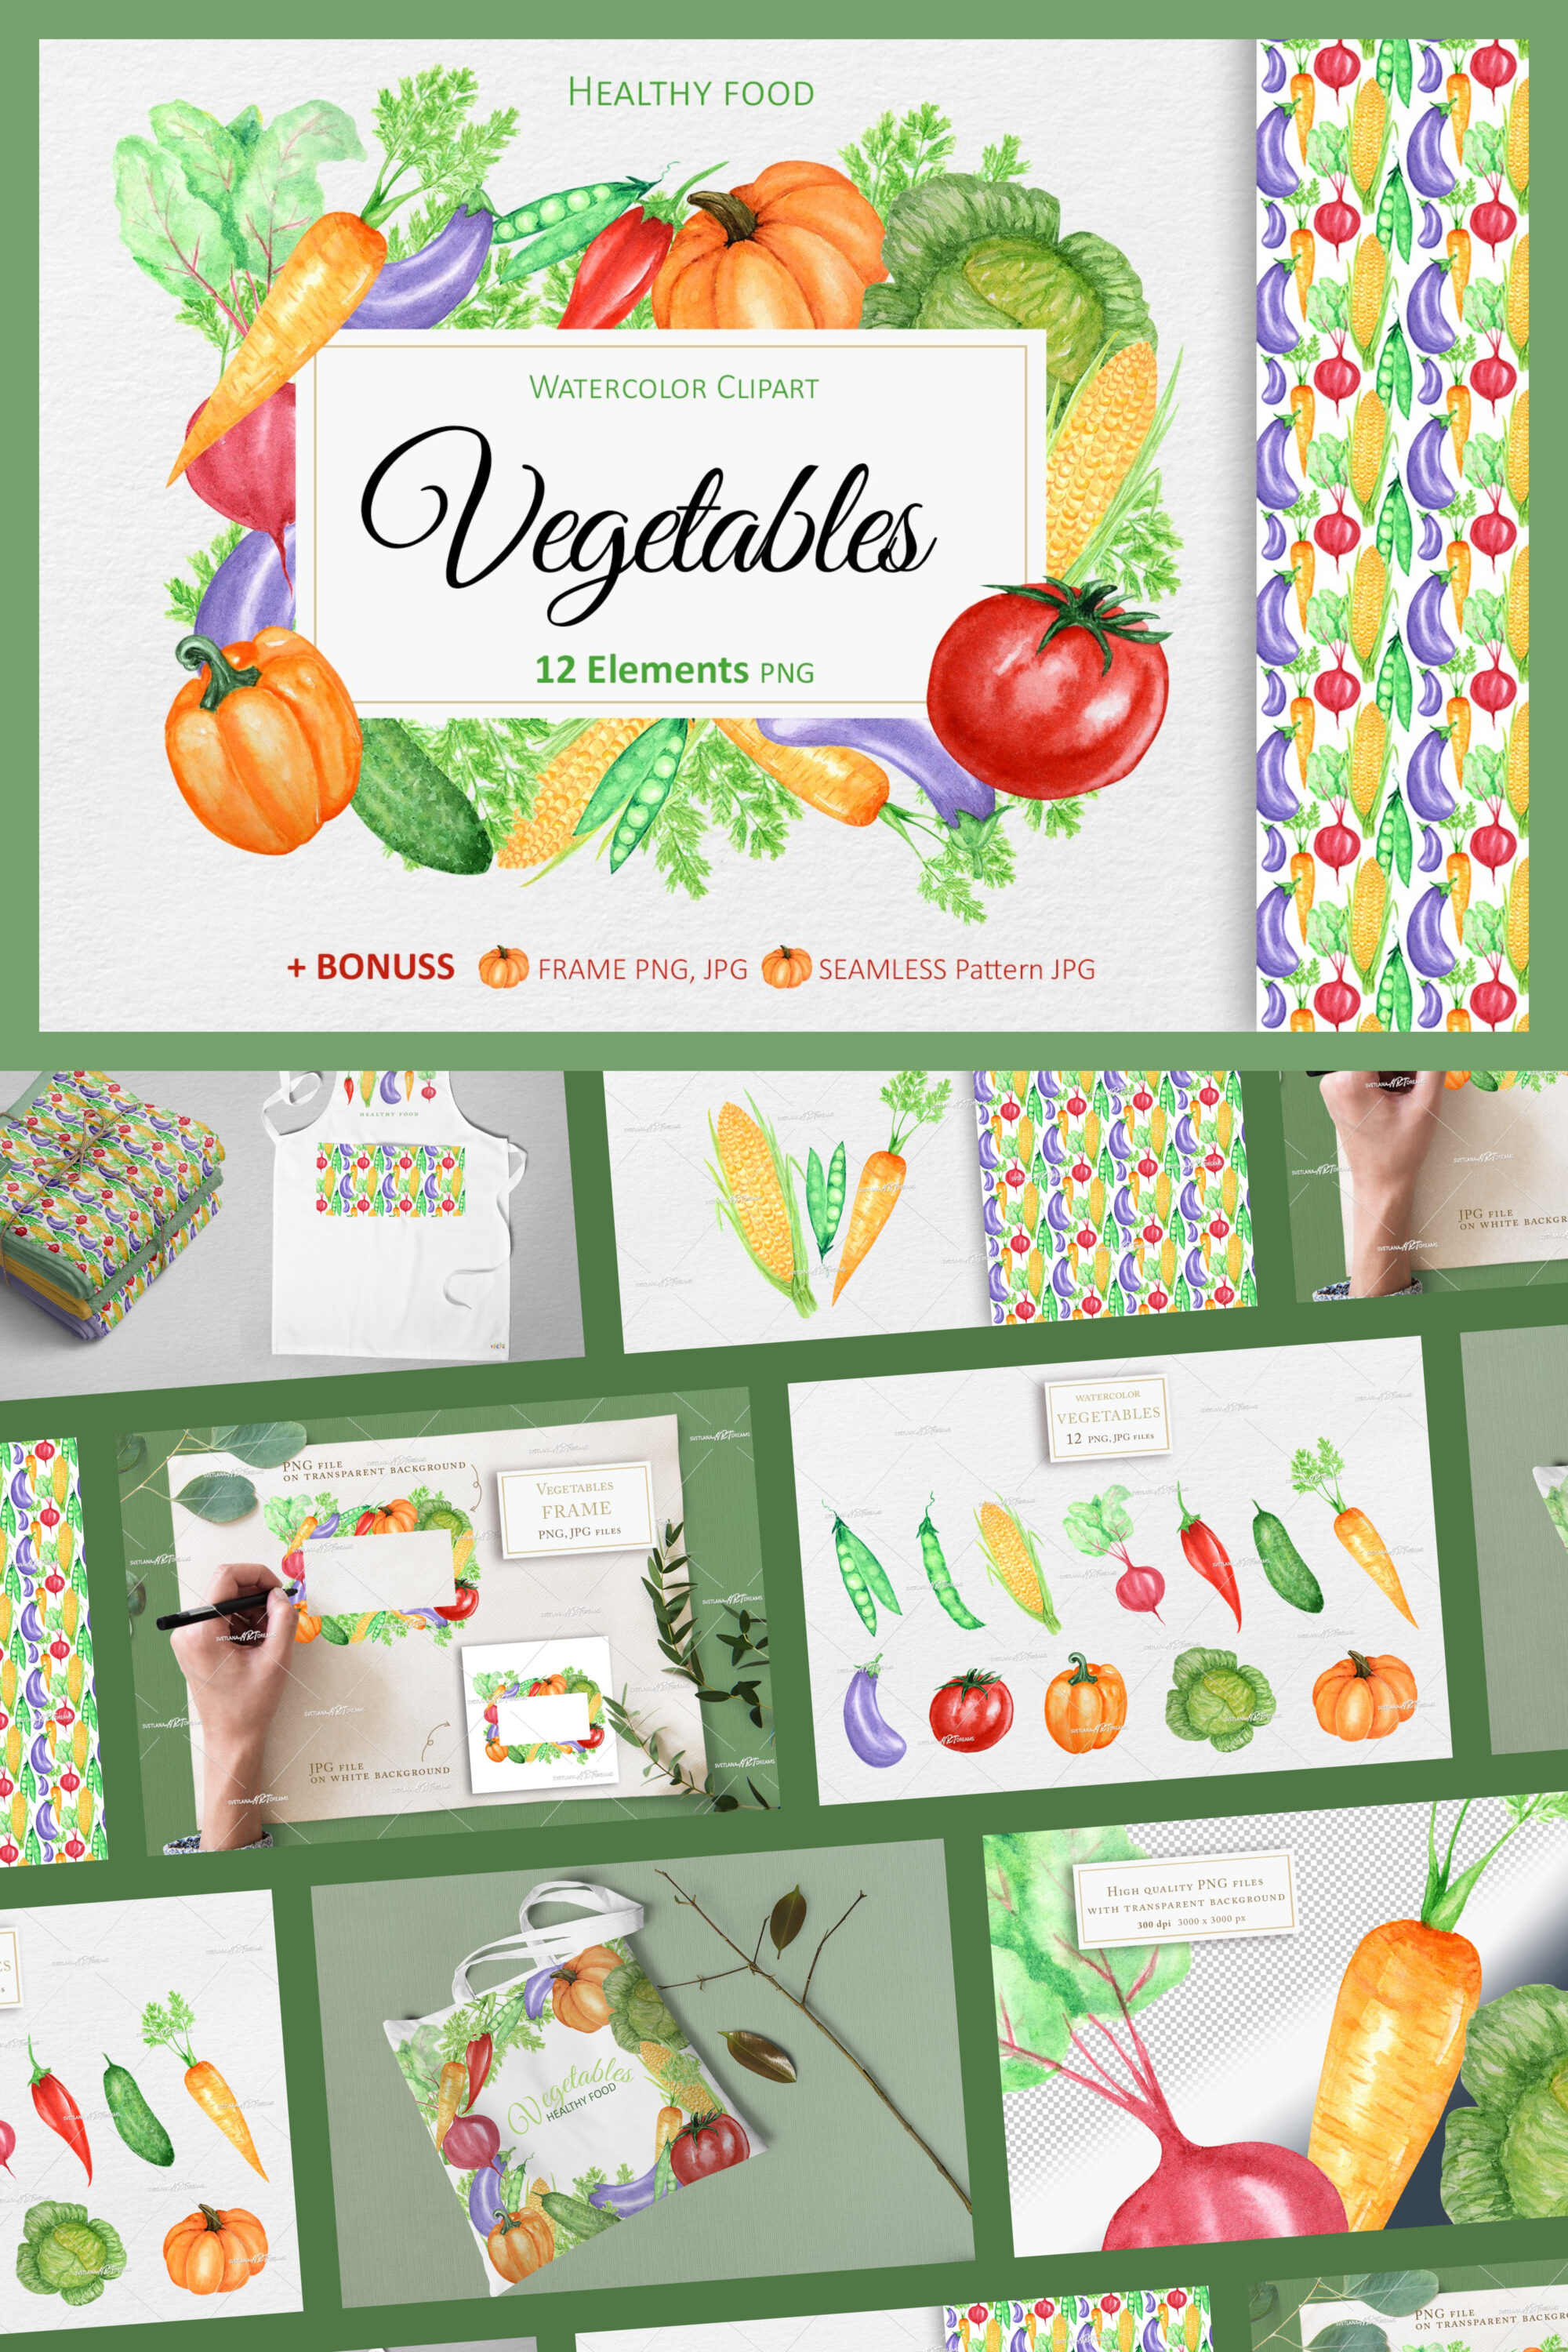 Vegetables watercolor clipart pattern healthy vegan food of pinterest.